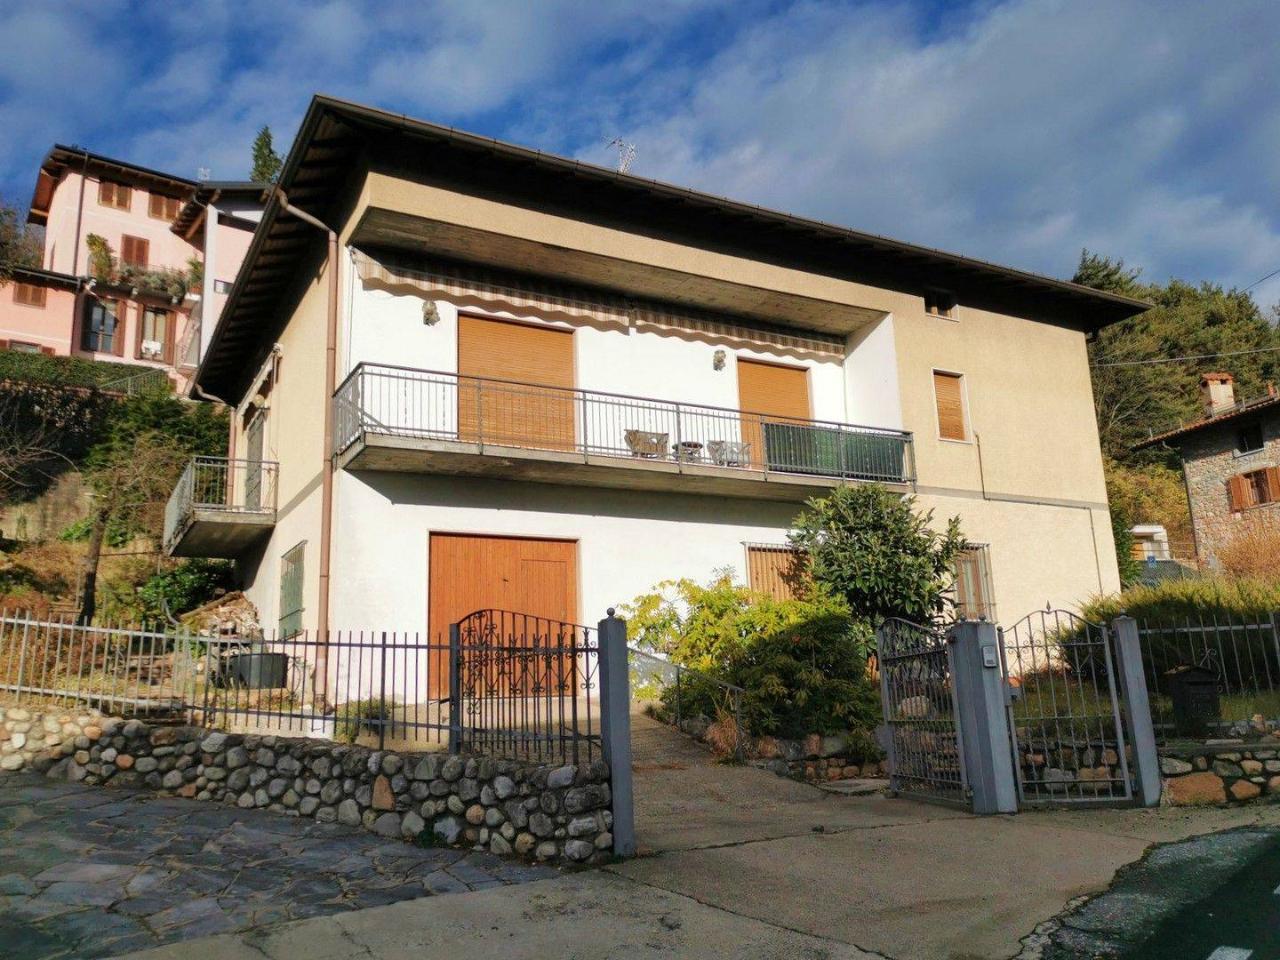 Villa in vendita a Cuasso Al Monte